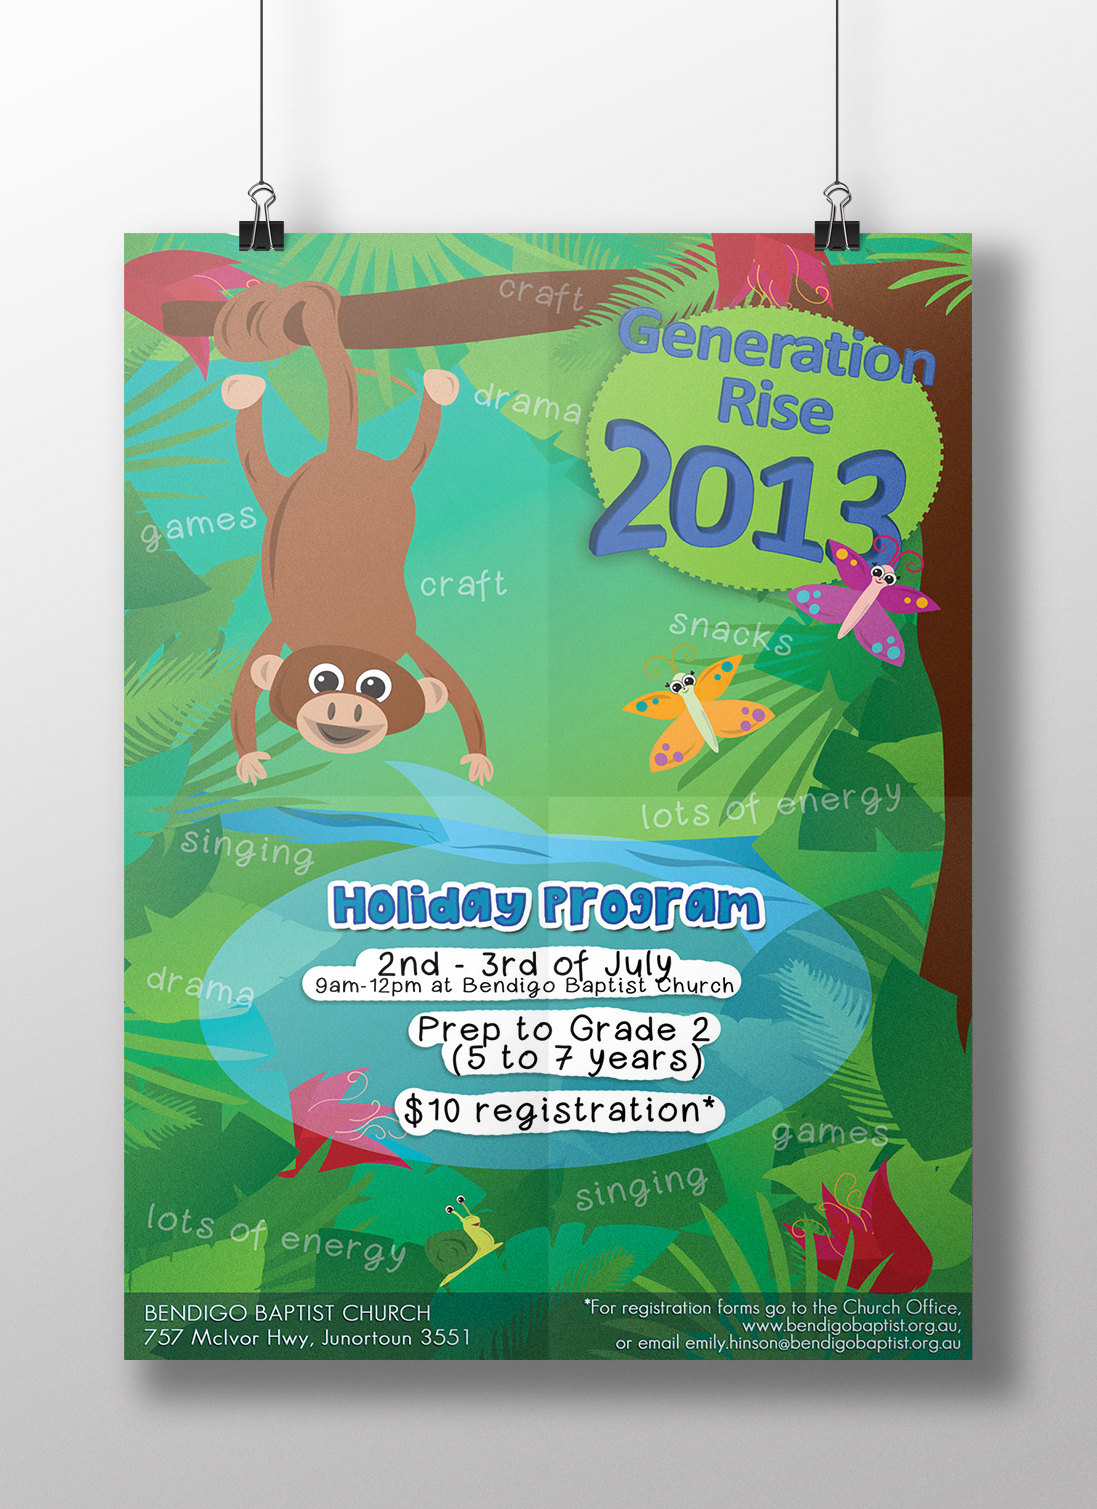  Children's holiday program advertisment poster.&nbsp; 